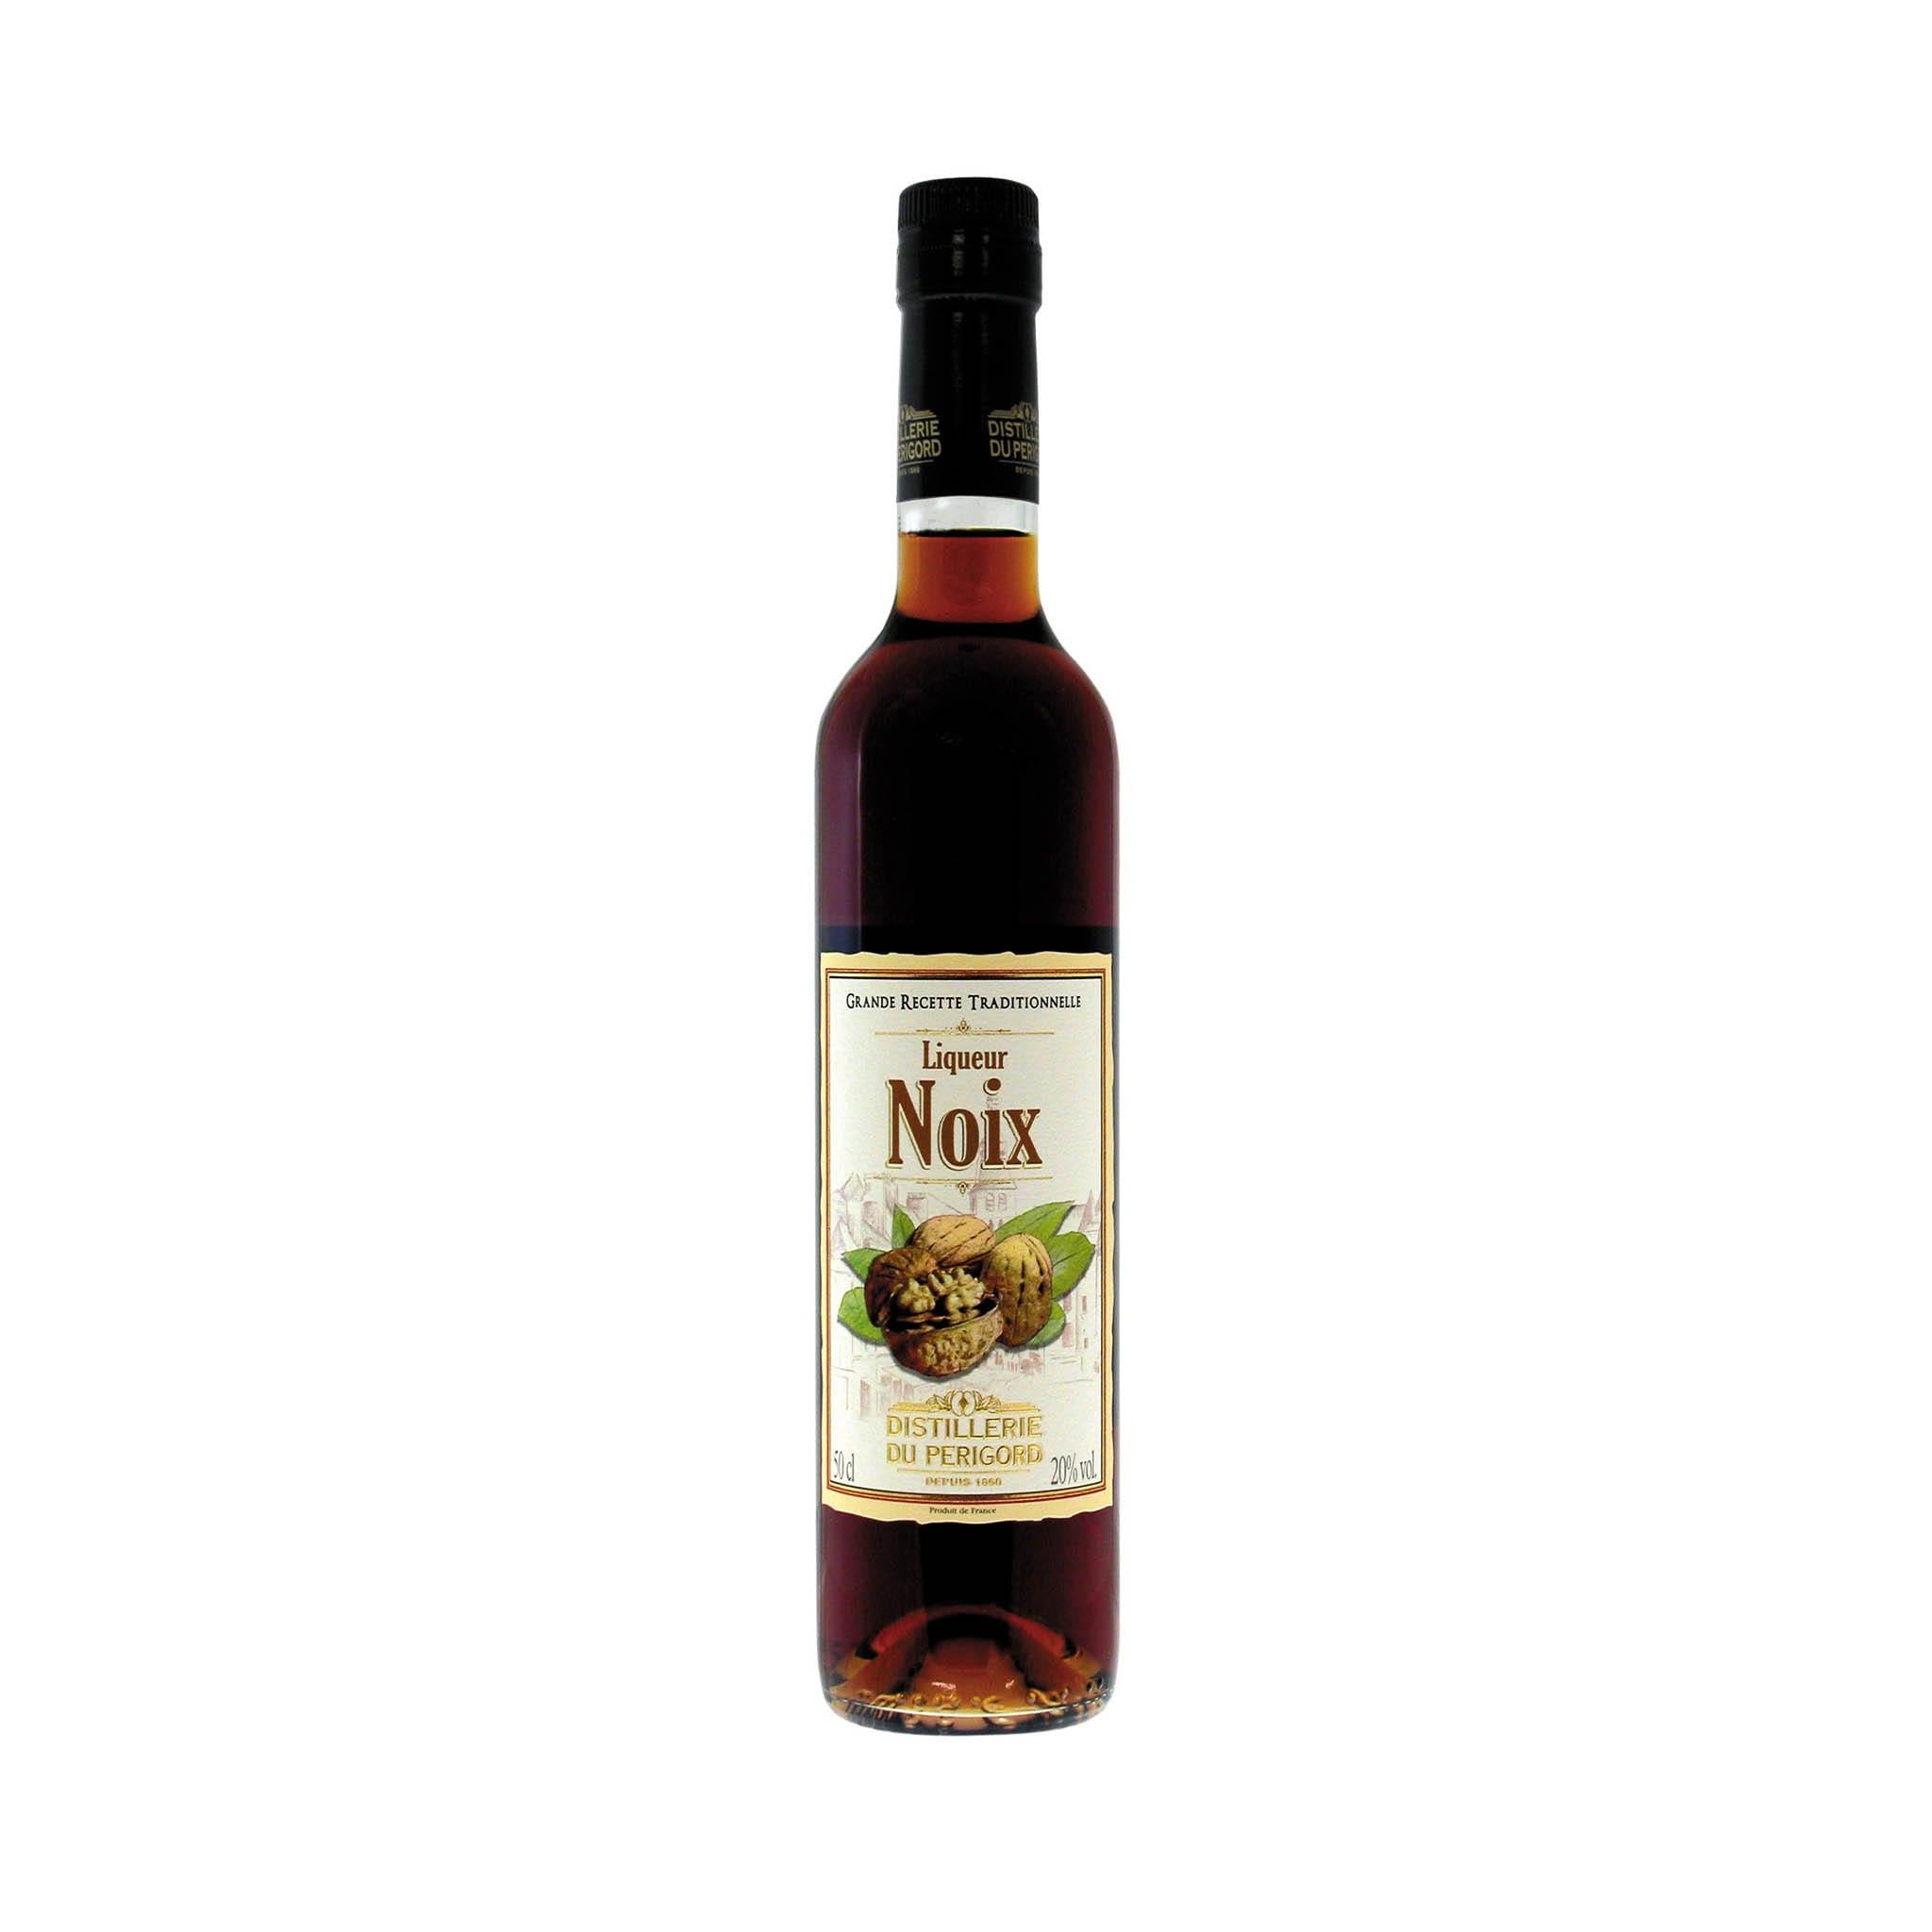 Cherry Rocher Walnut Liquor, 500ml